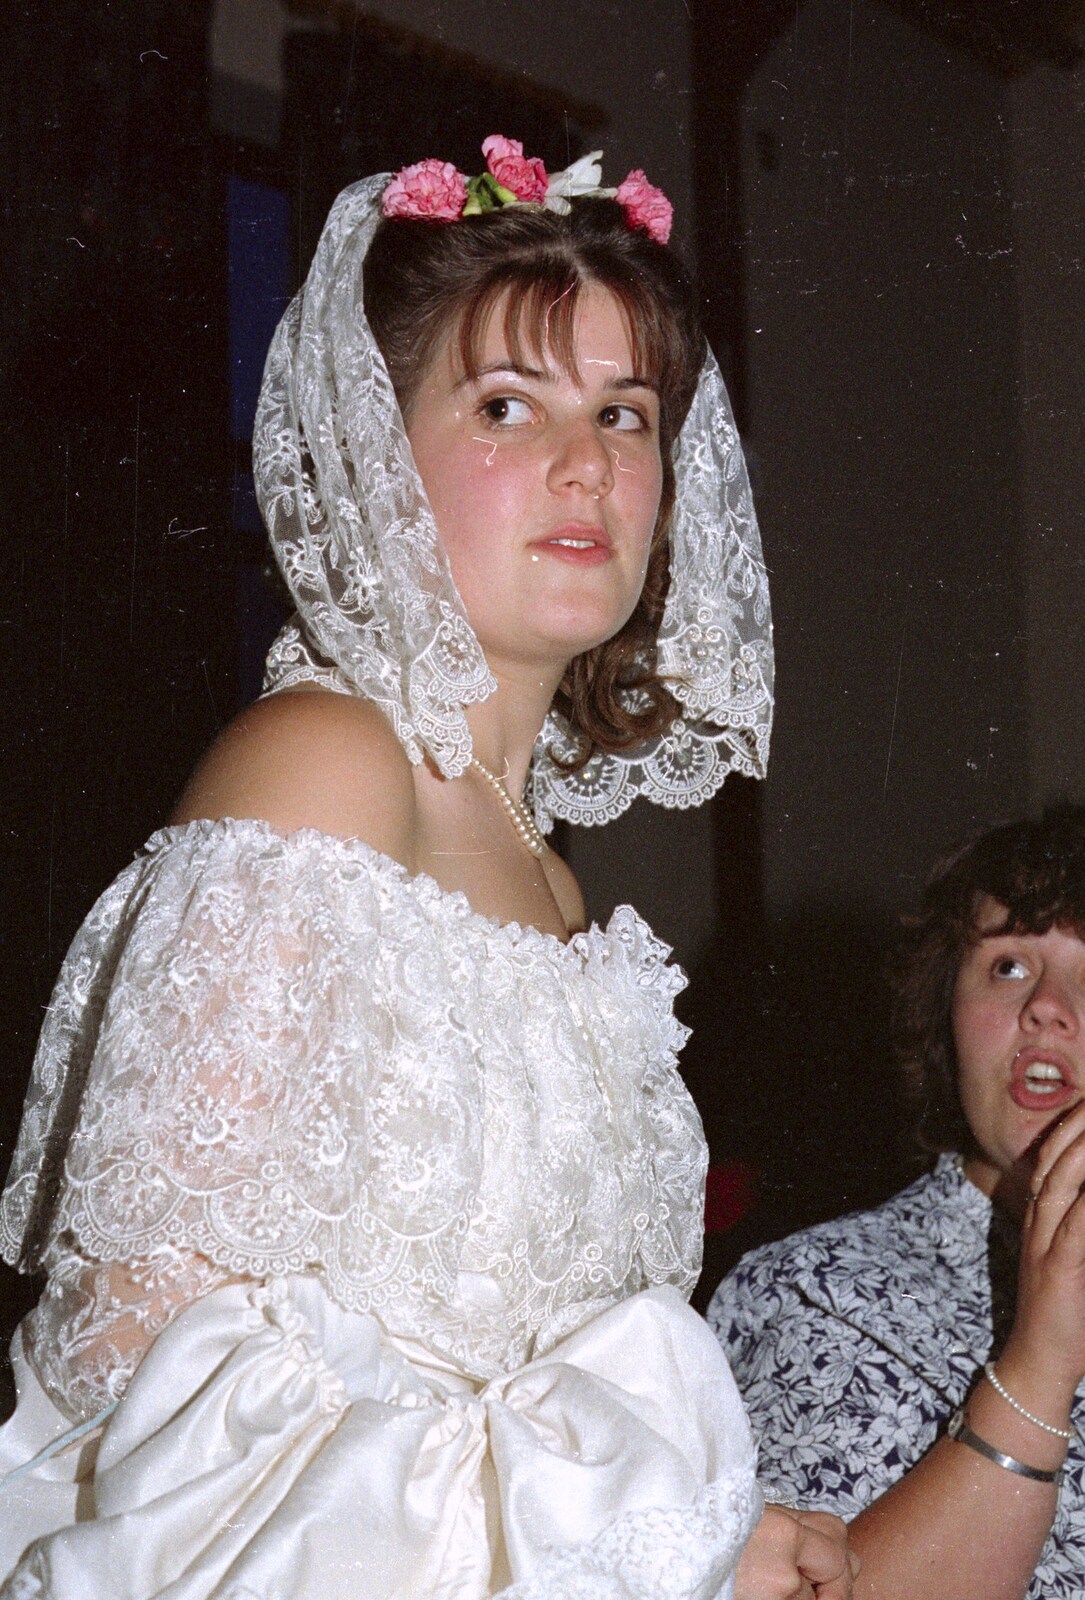 Kelly looks back from Printec Kelly's Wedding, Eye, Suffolk - 25th April 1992